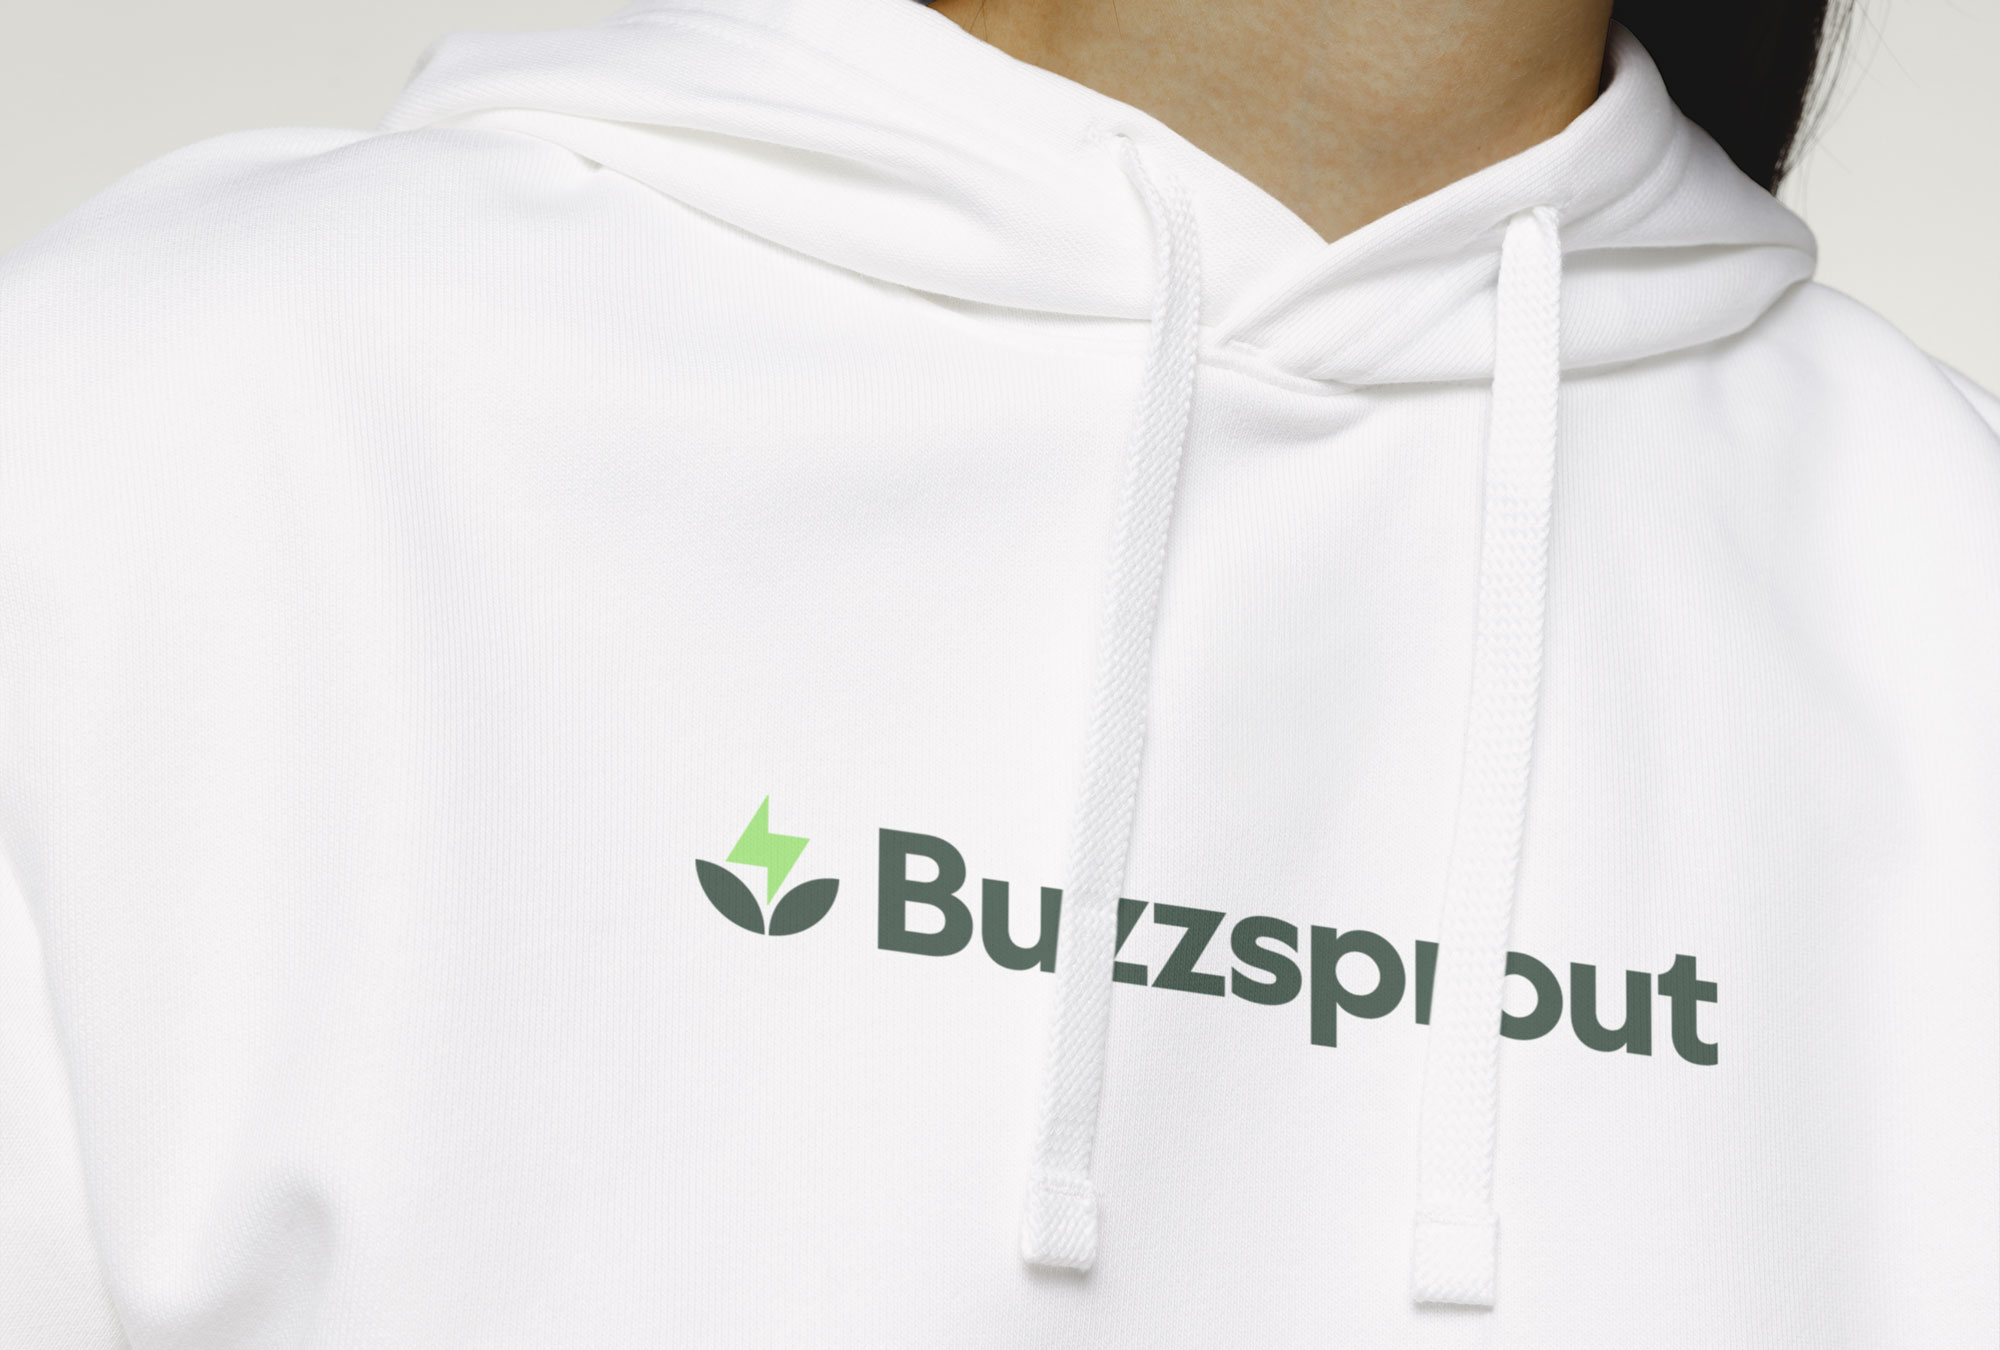 buzzsprout_hoodie